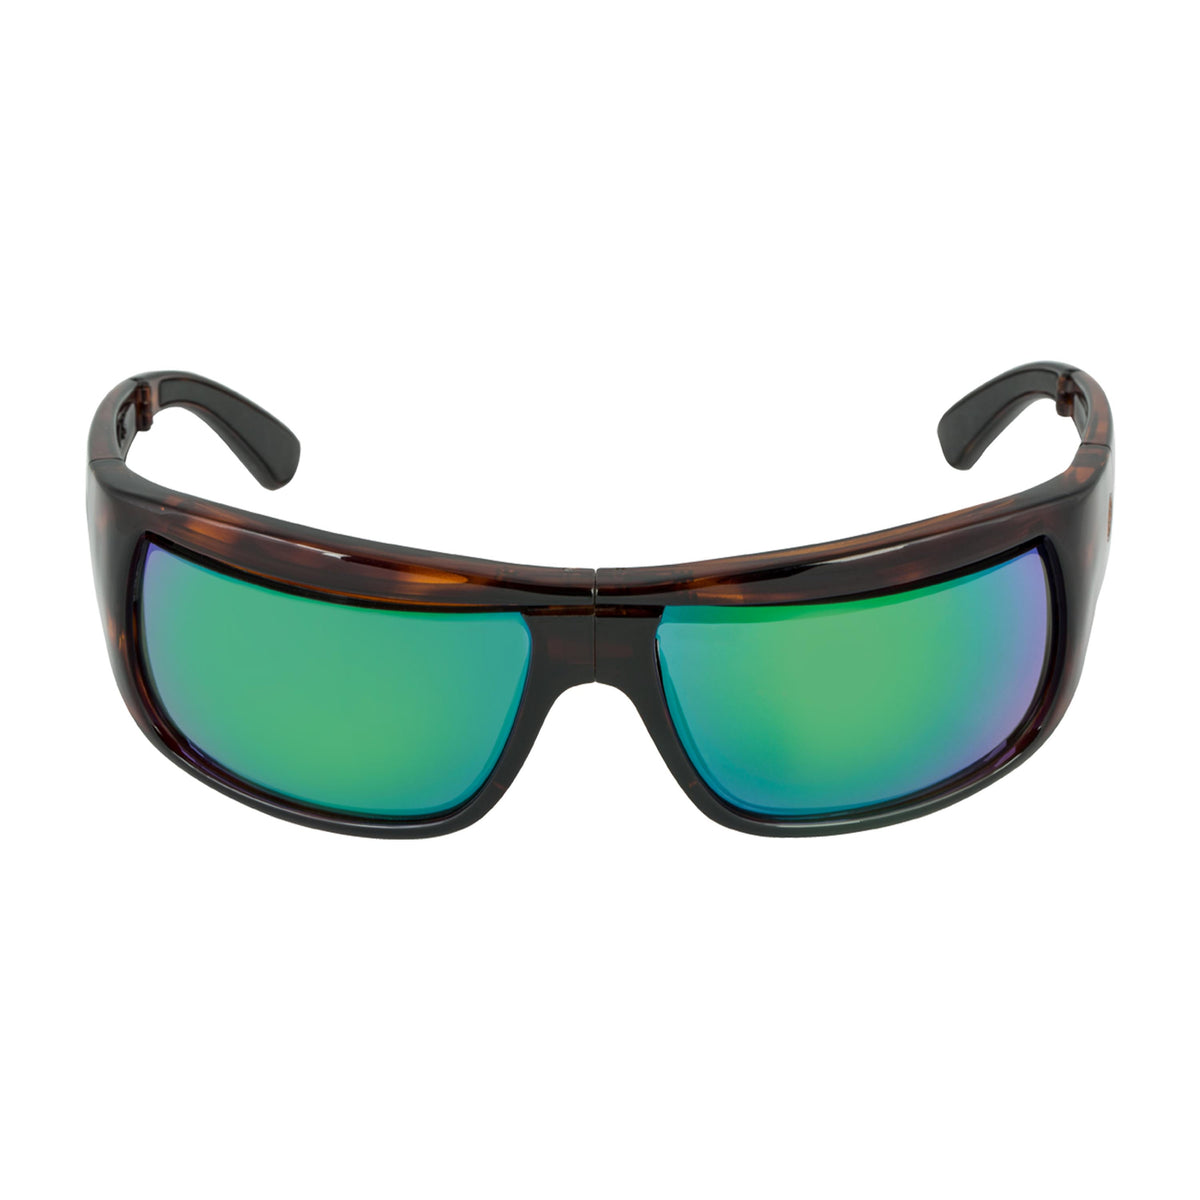 Popticals, Premium Compact Sunglasses, PopH2O, 010070-CTEN, Polarized Sunglasses, Gloss Tortoise Frame, Gray Lenses w/Green Mirror Finish, Front View